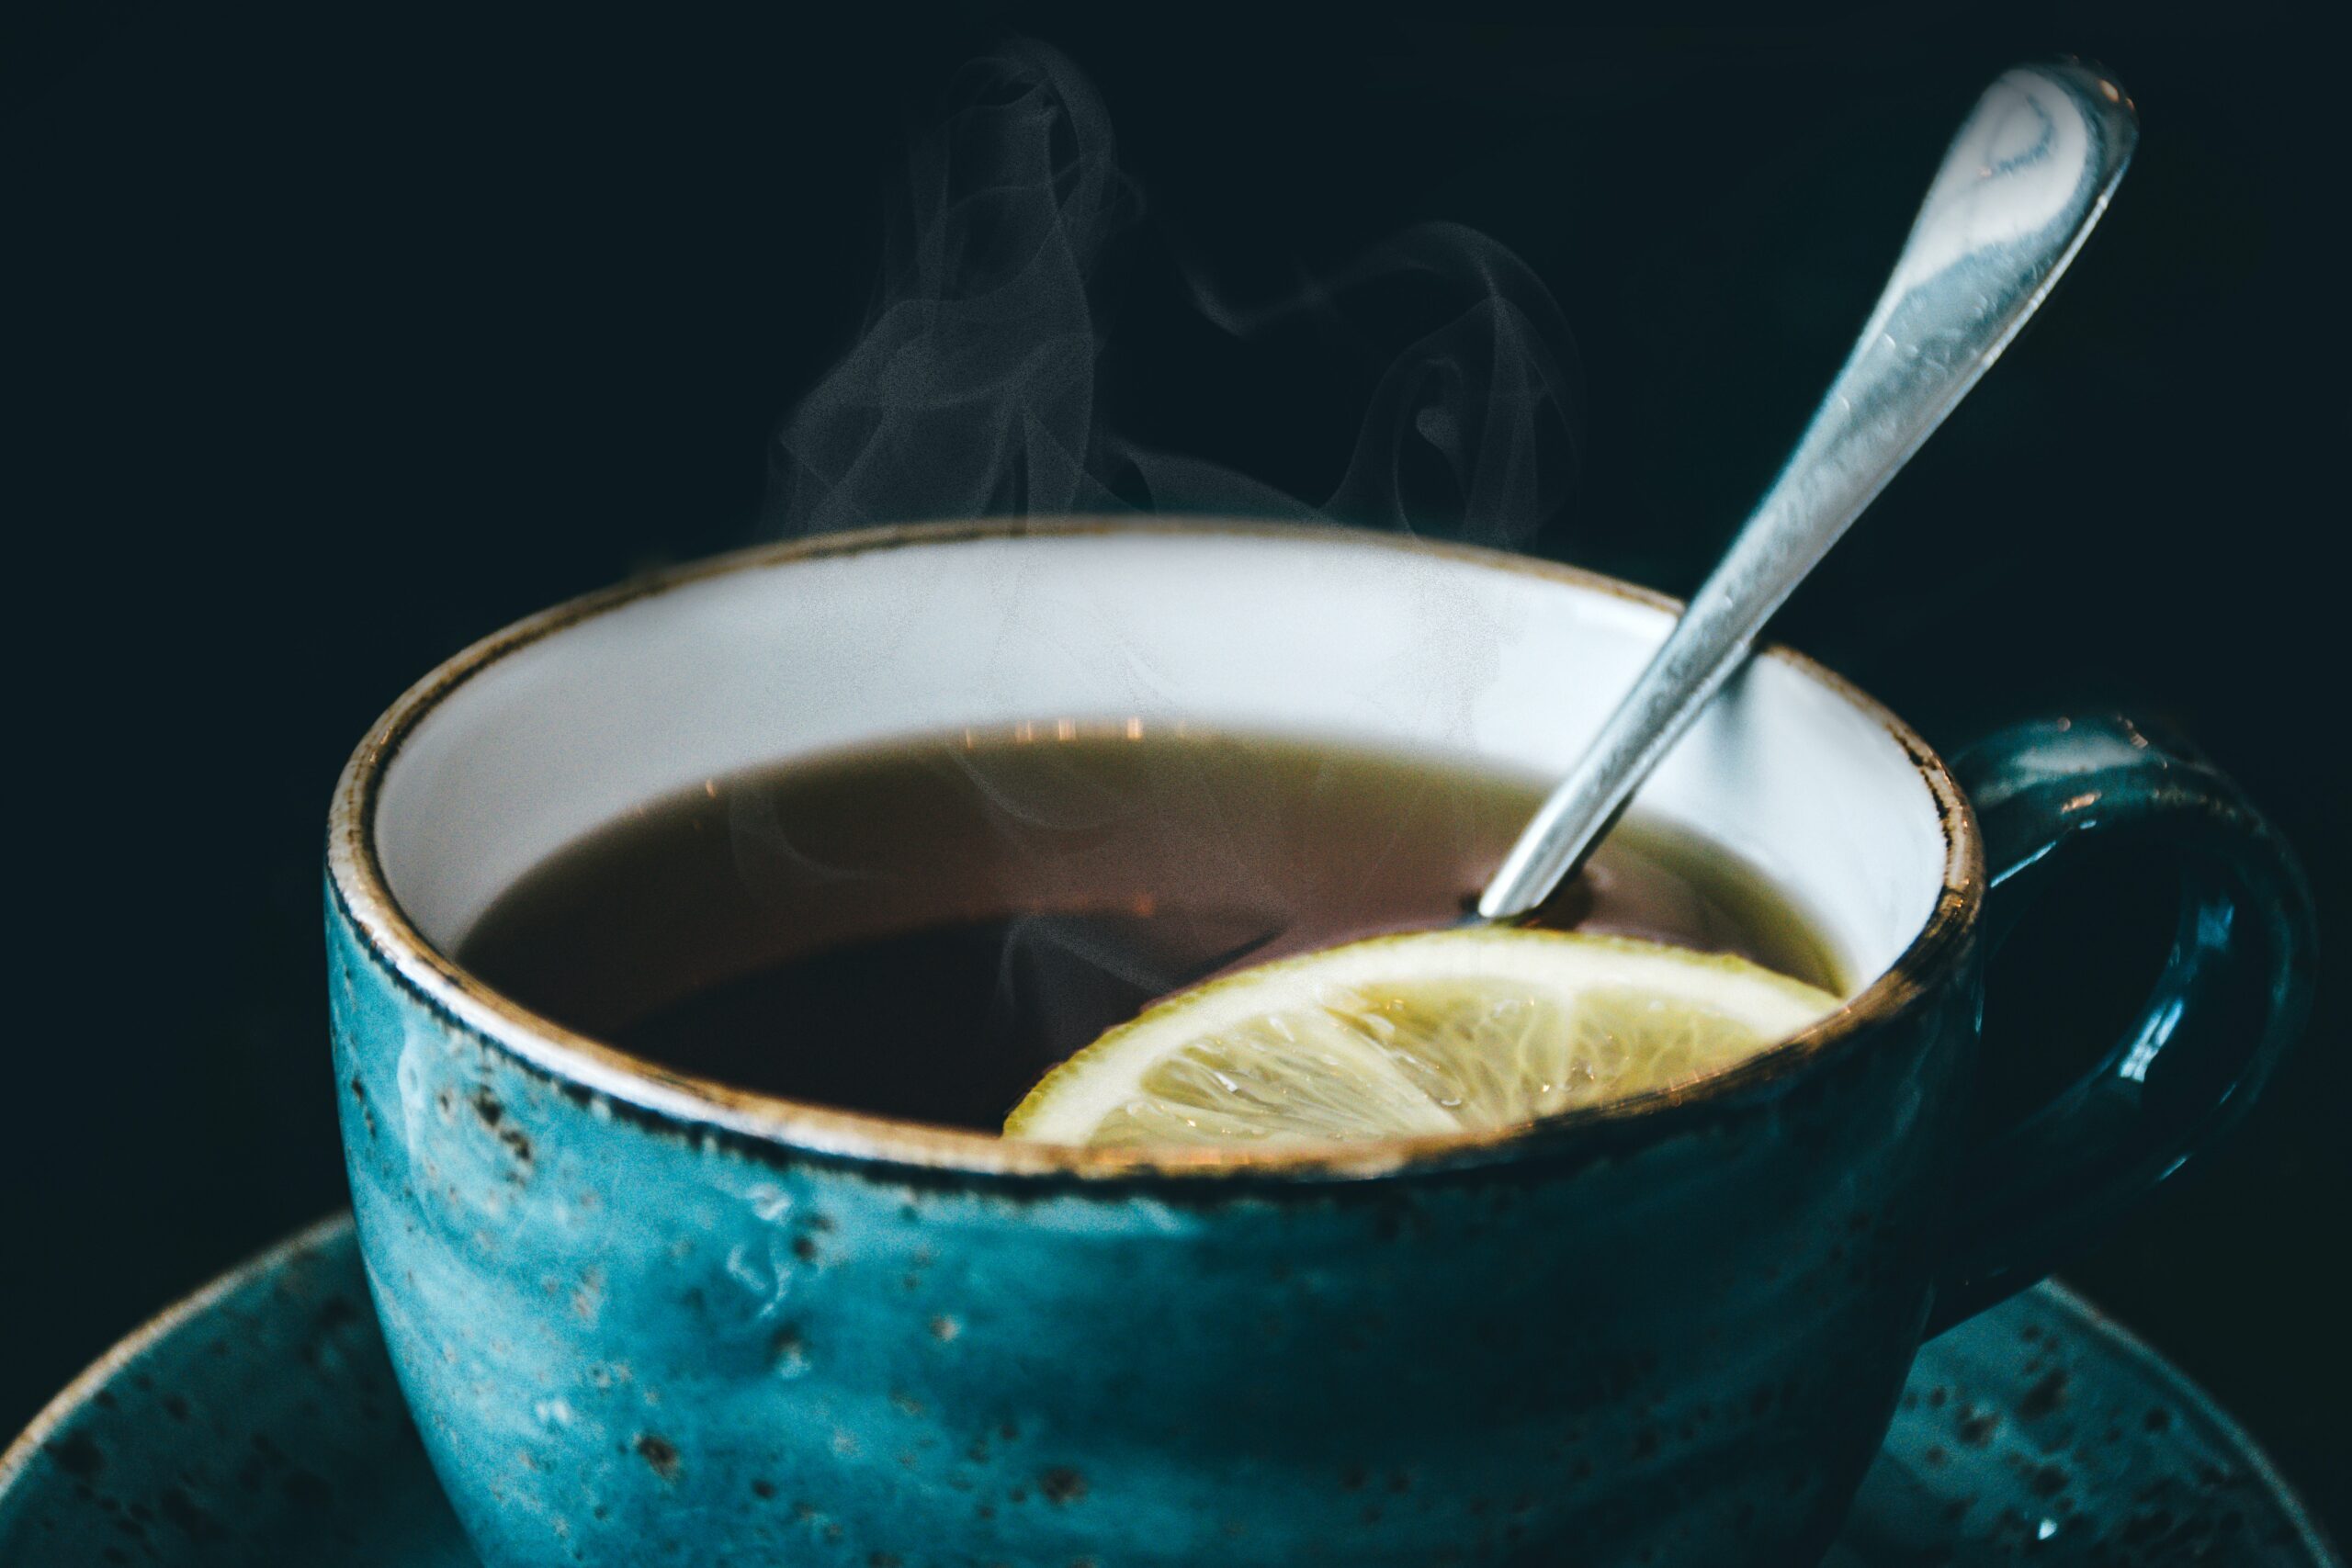 kratom powder tea recipe with citrus and honey